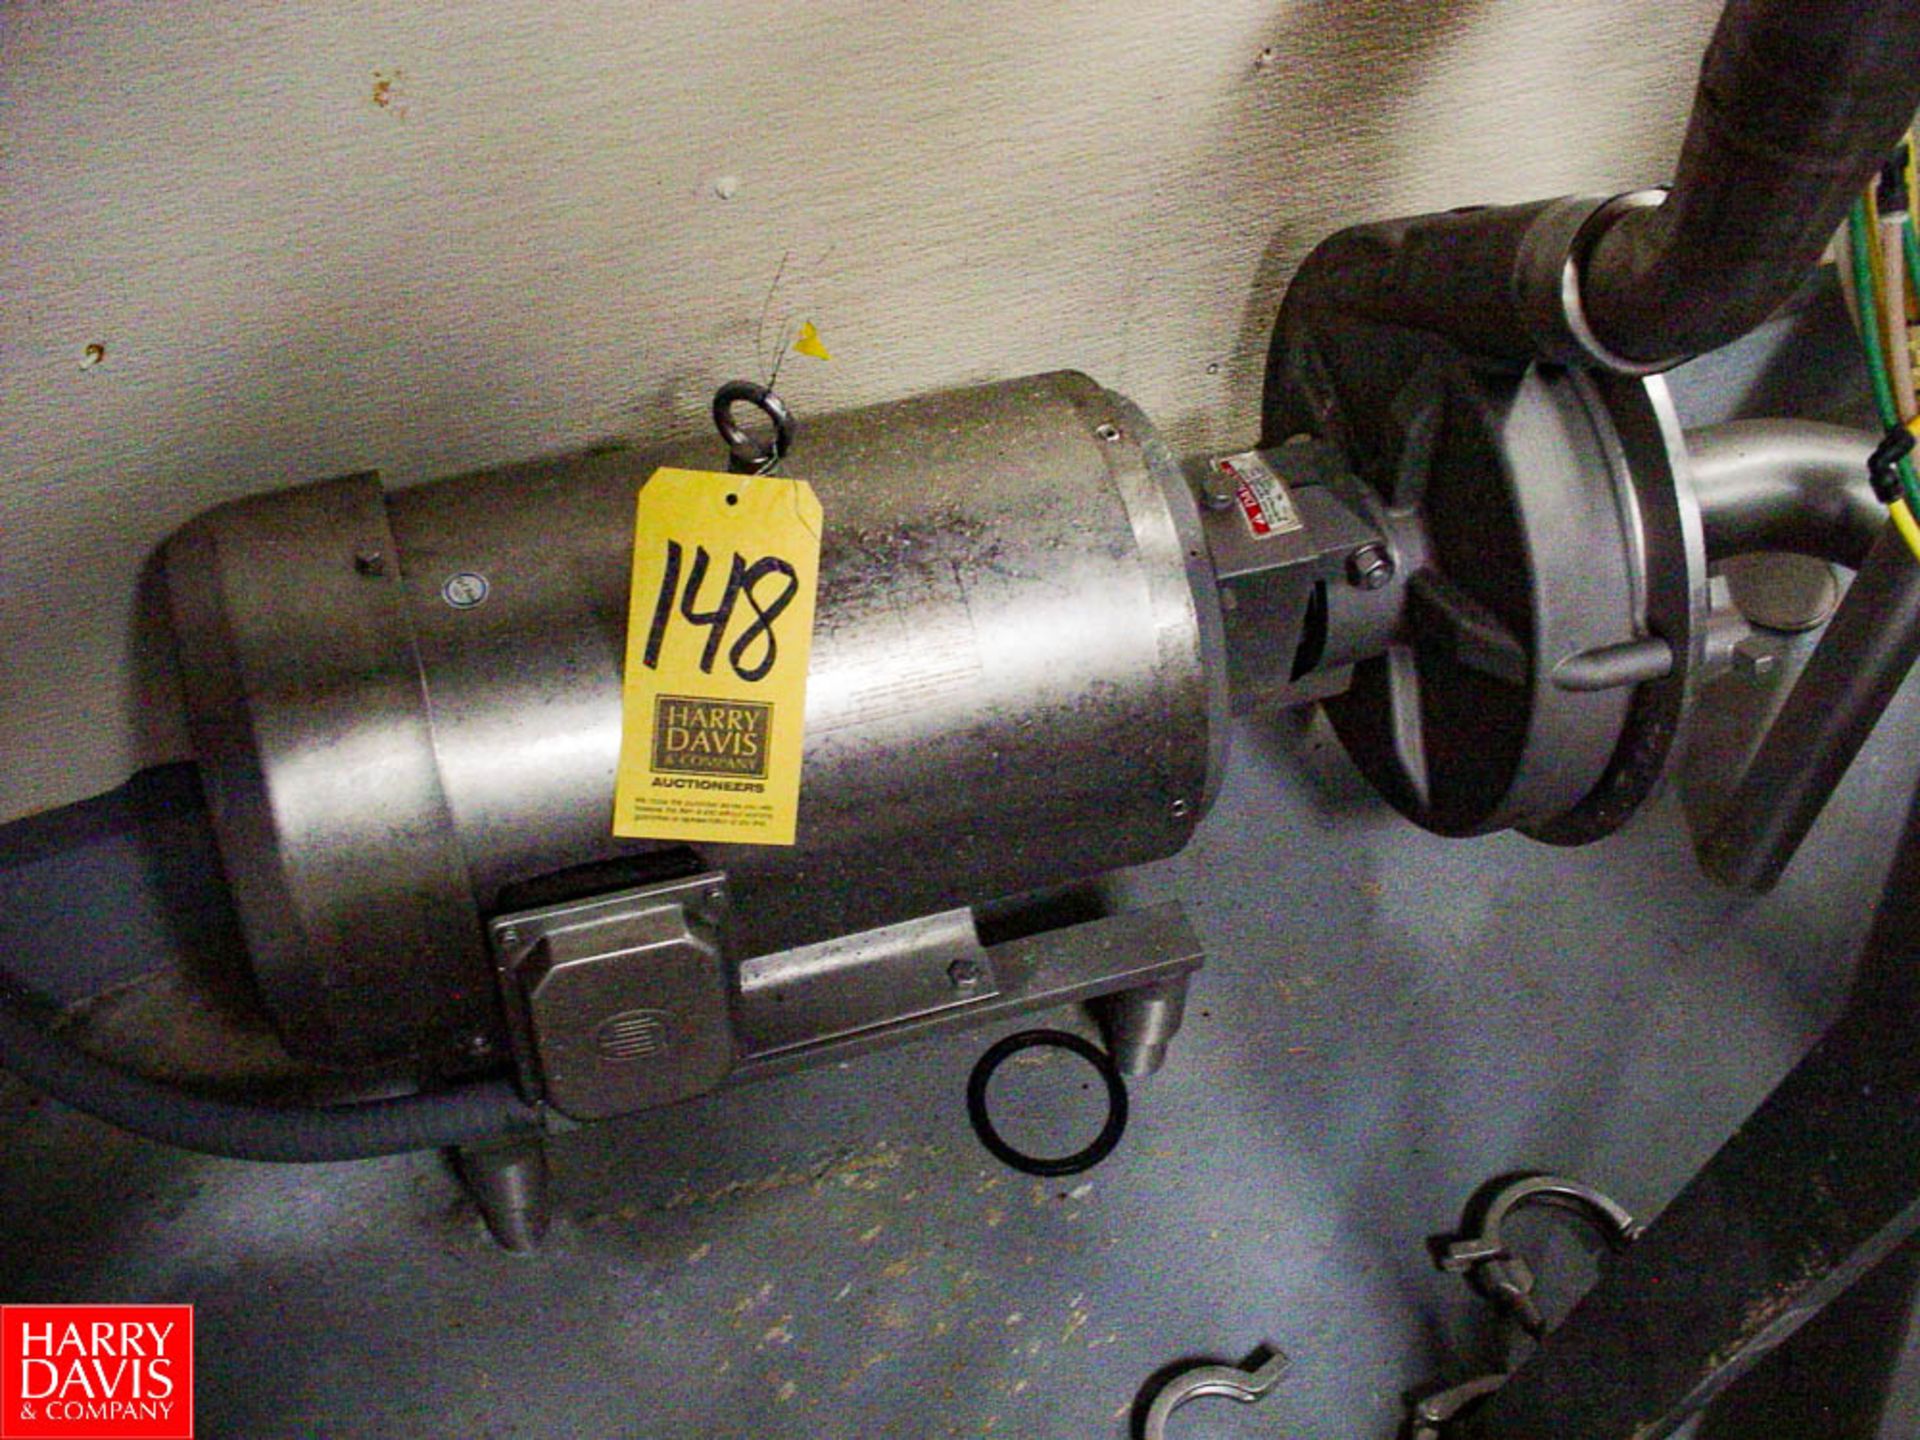 FRISTAM Centrifugal Pump Model FPX-3551, 7-1/2 HP 1750 RPM, 3” X 2-1/2” CLAMP - Rigging Fee: $ 75